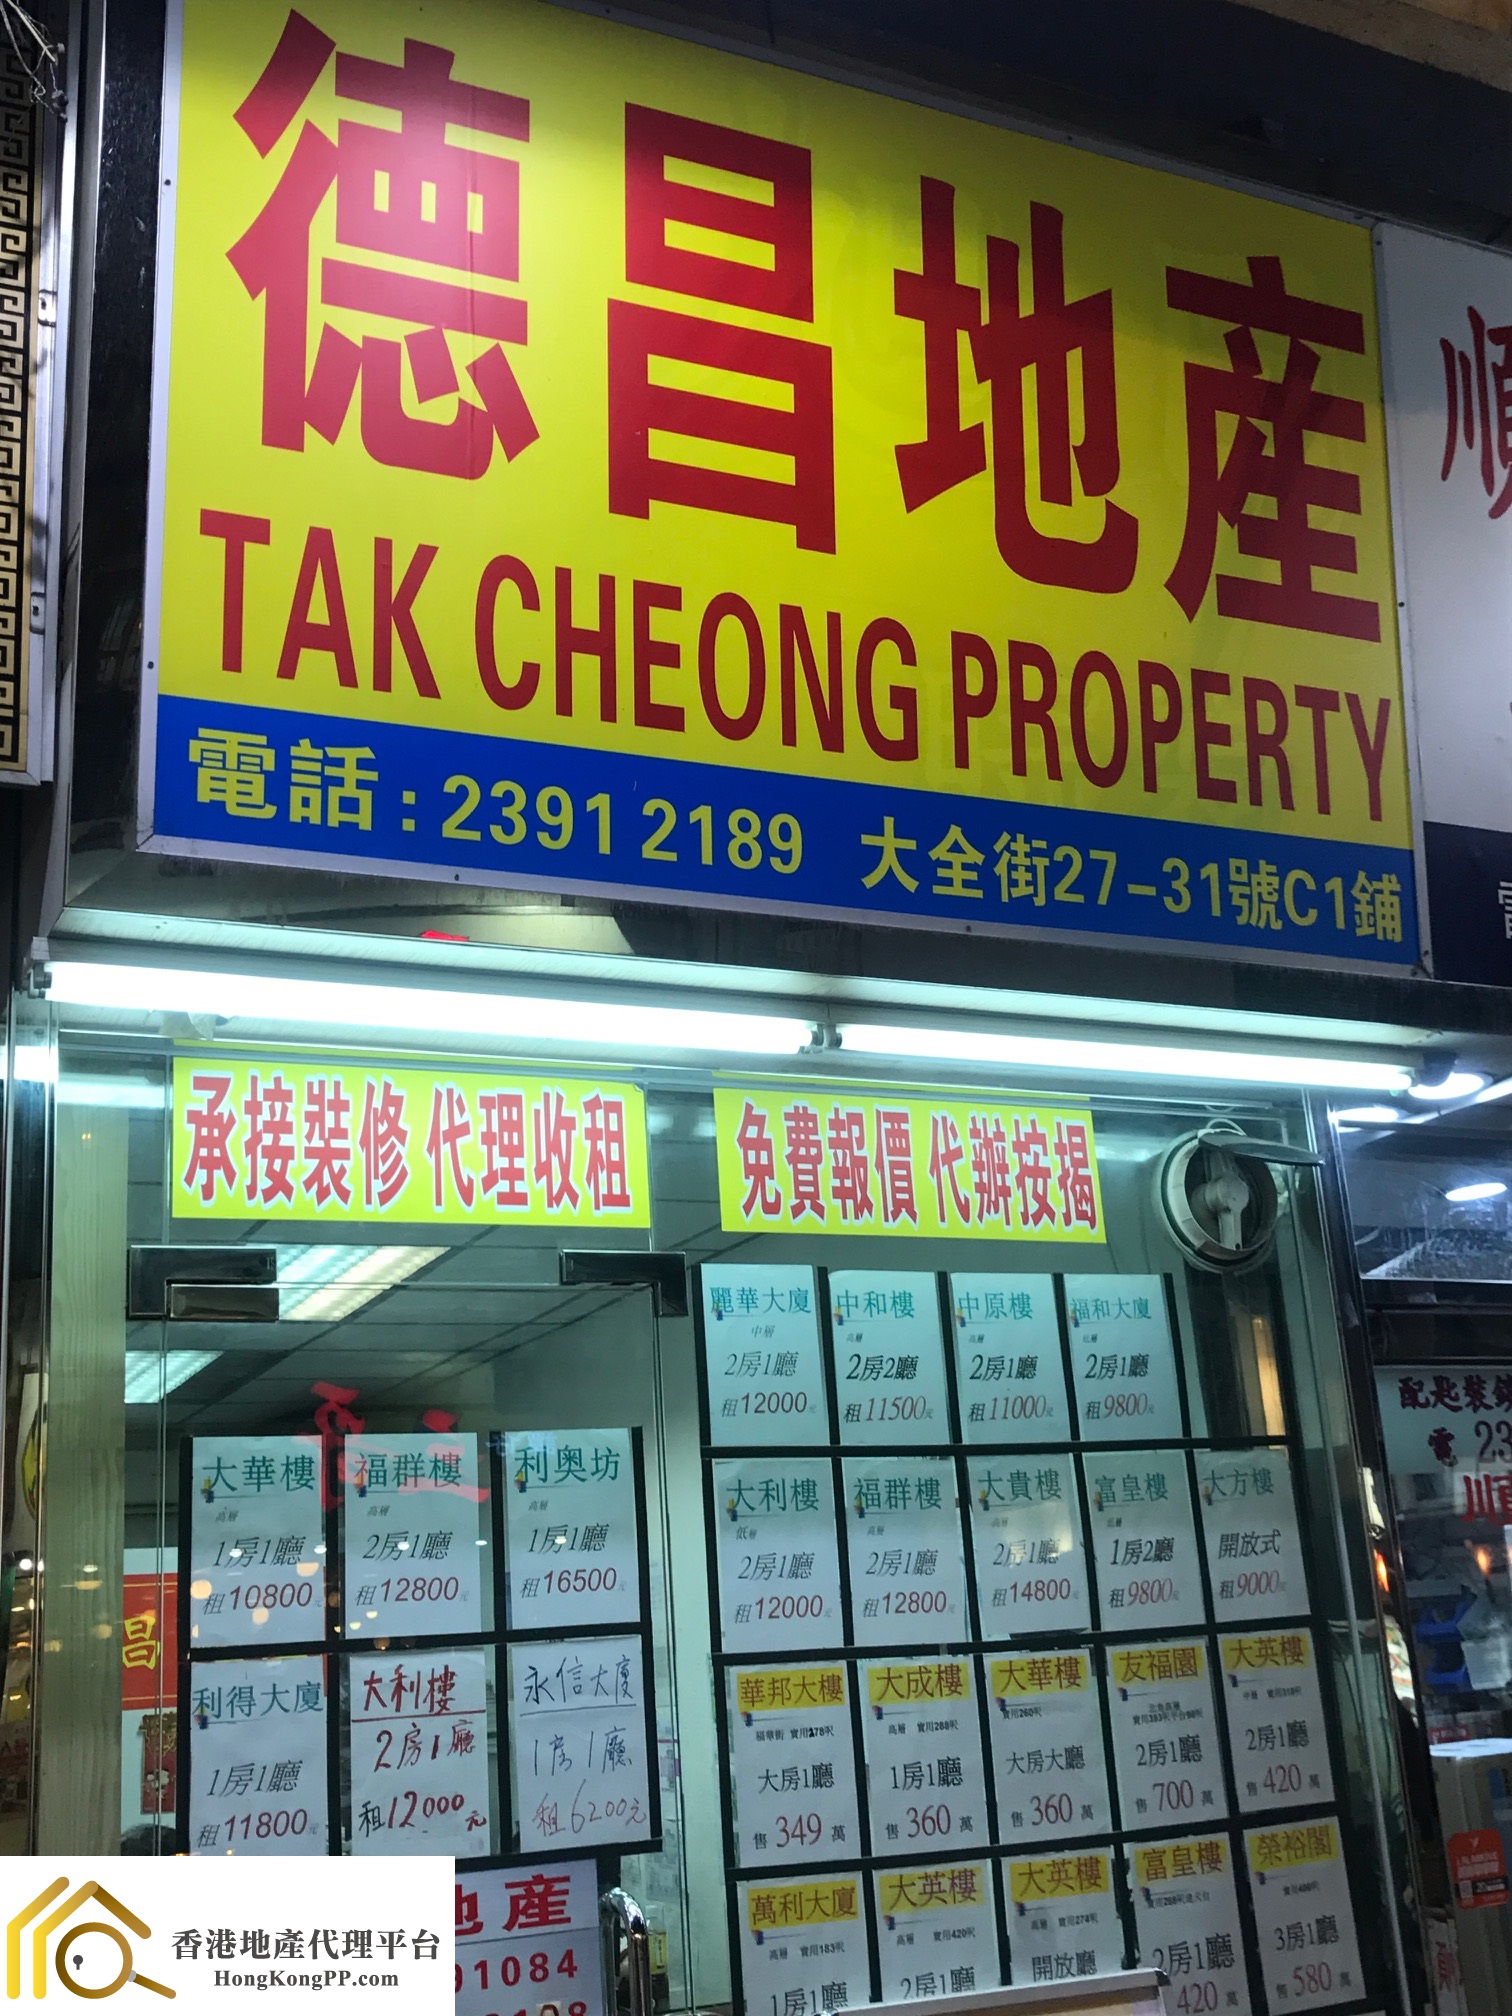 CarparkEstate Agent: 德昌地產 Tak Cheong Property